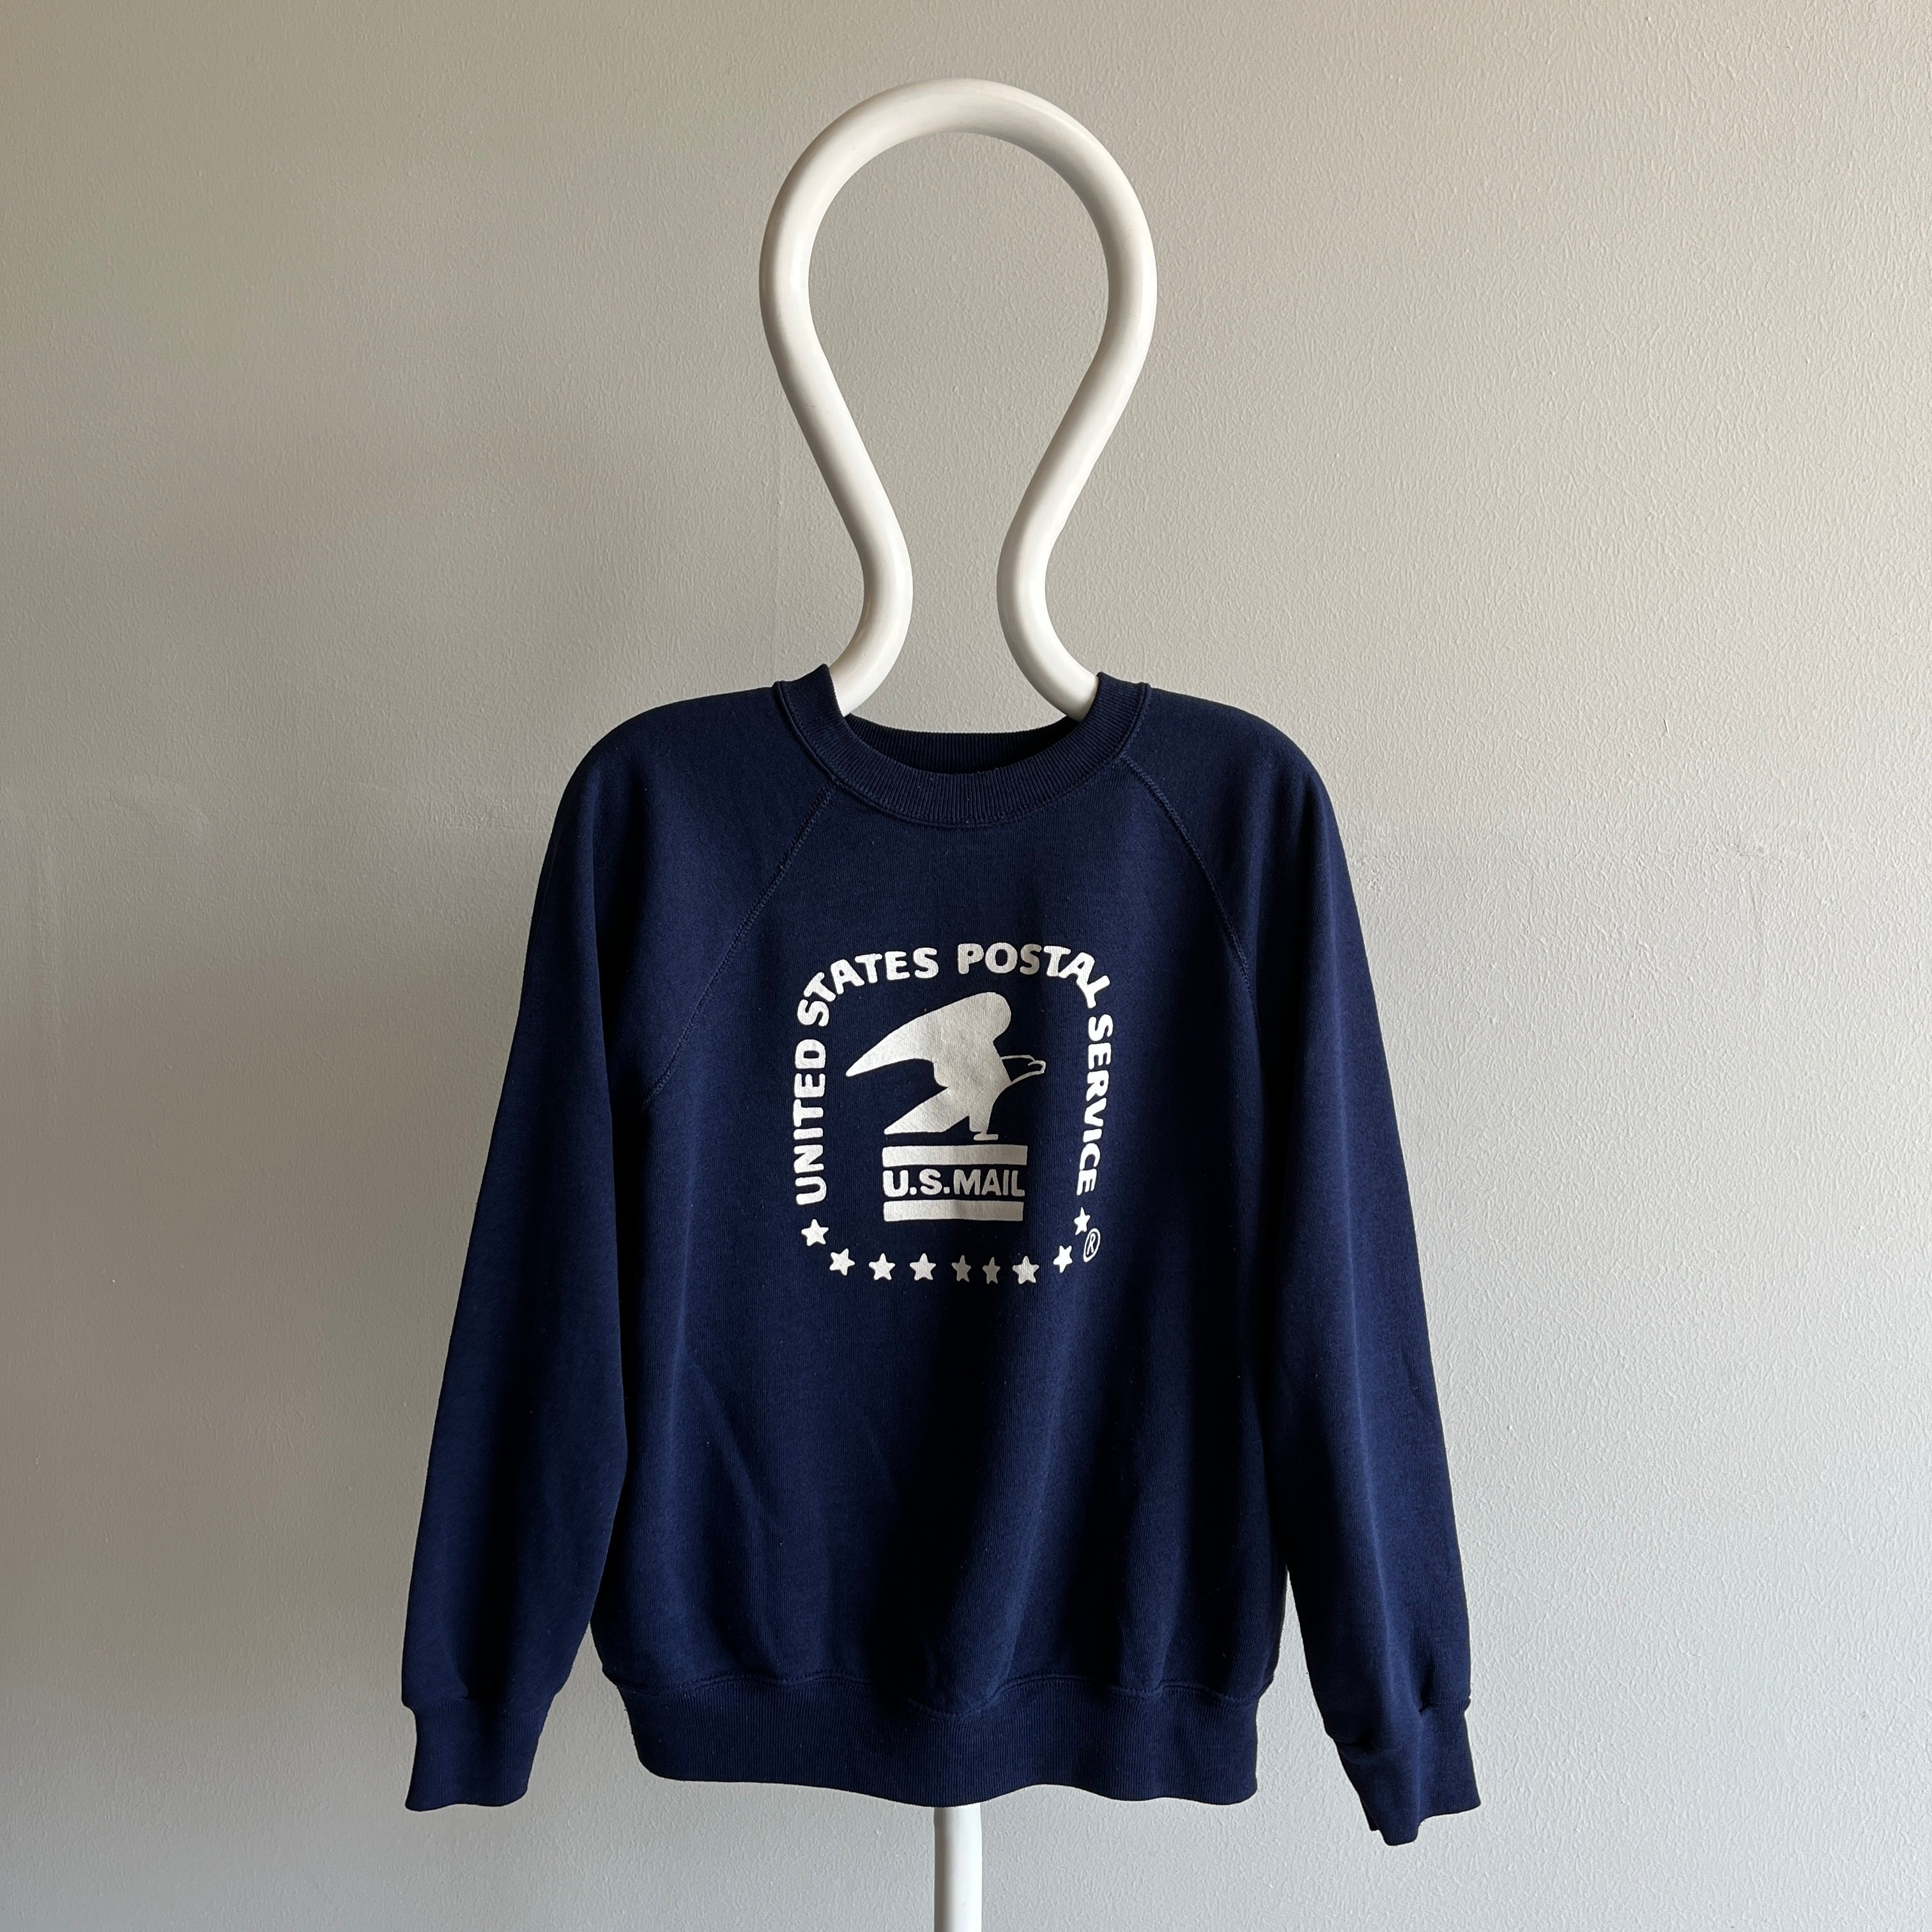 1980/90s United States Postal Service Sweatshirt